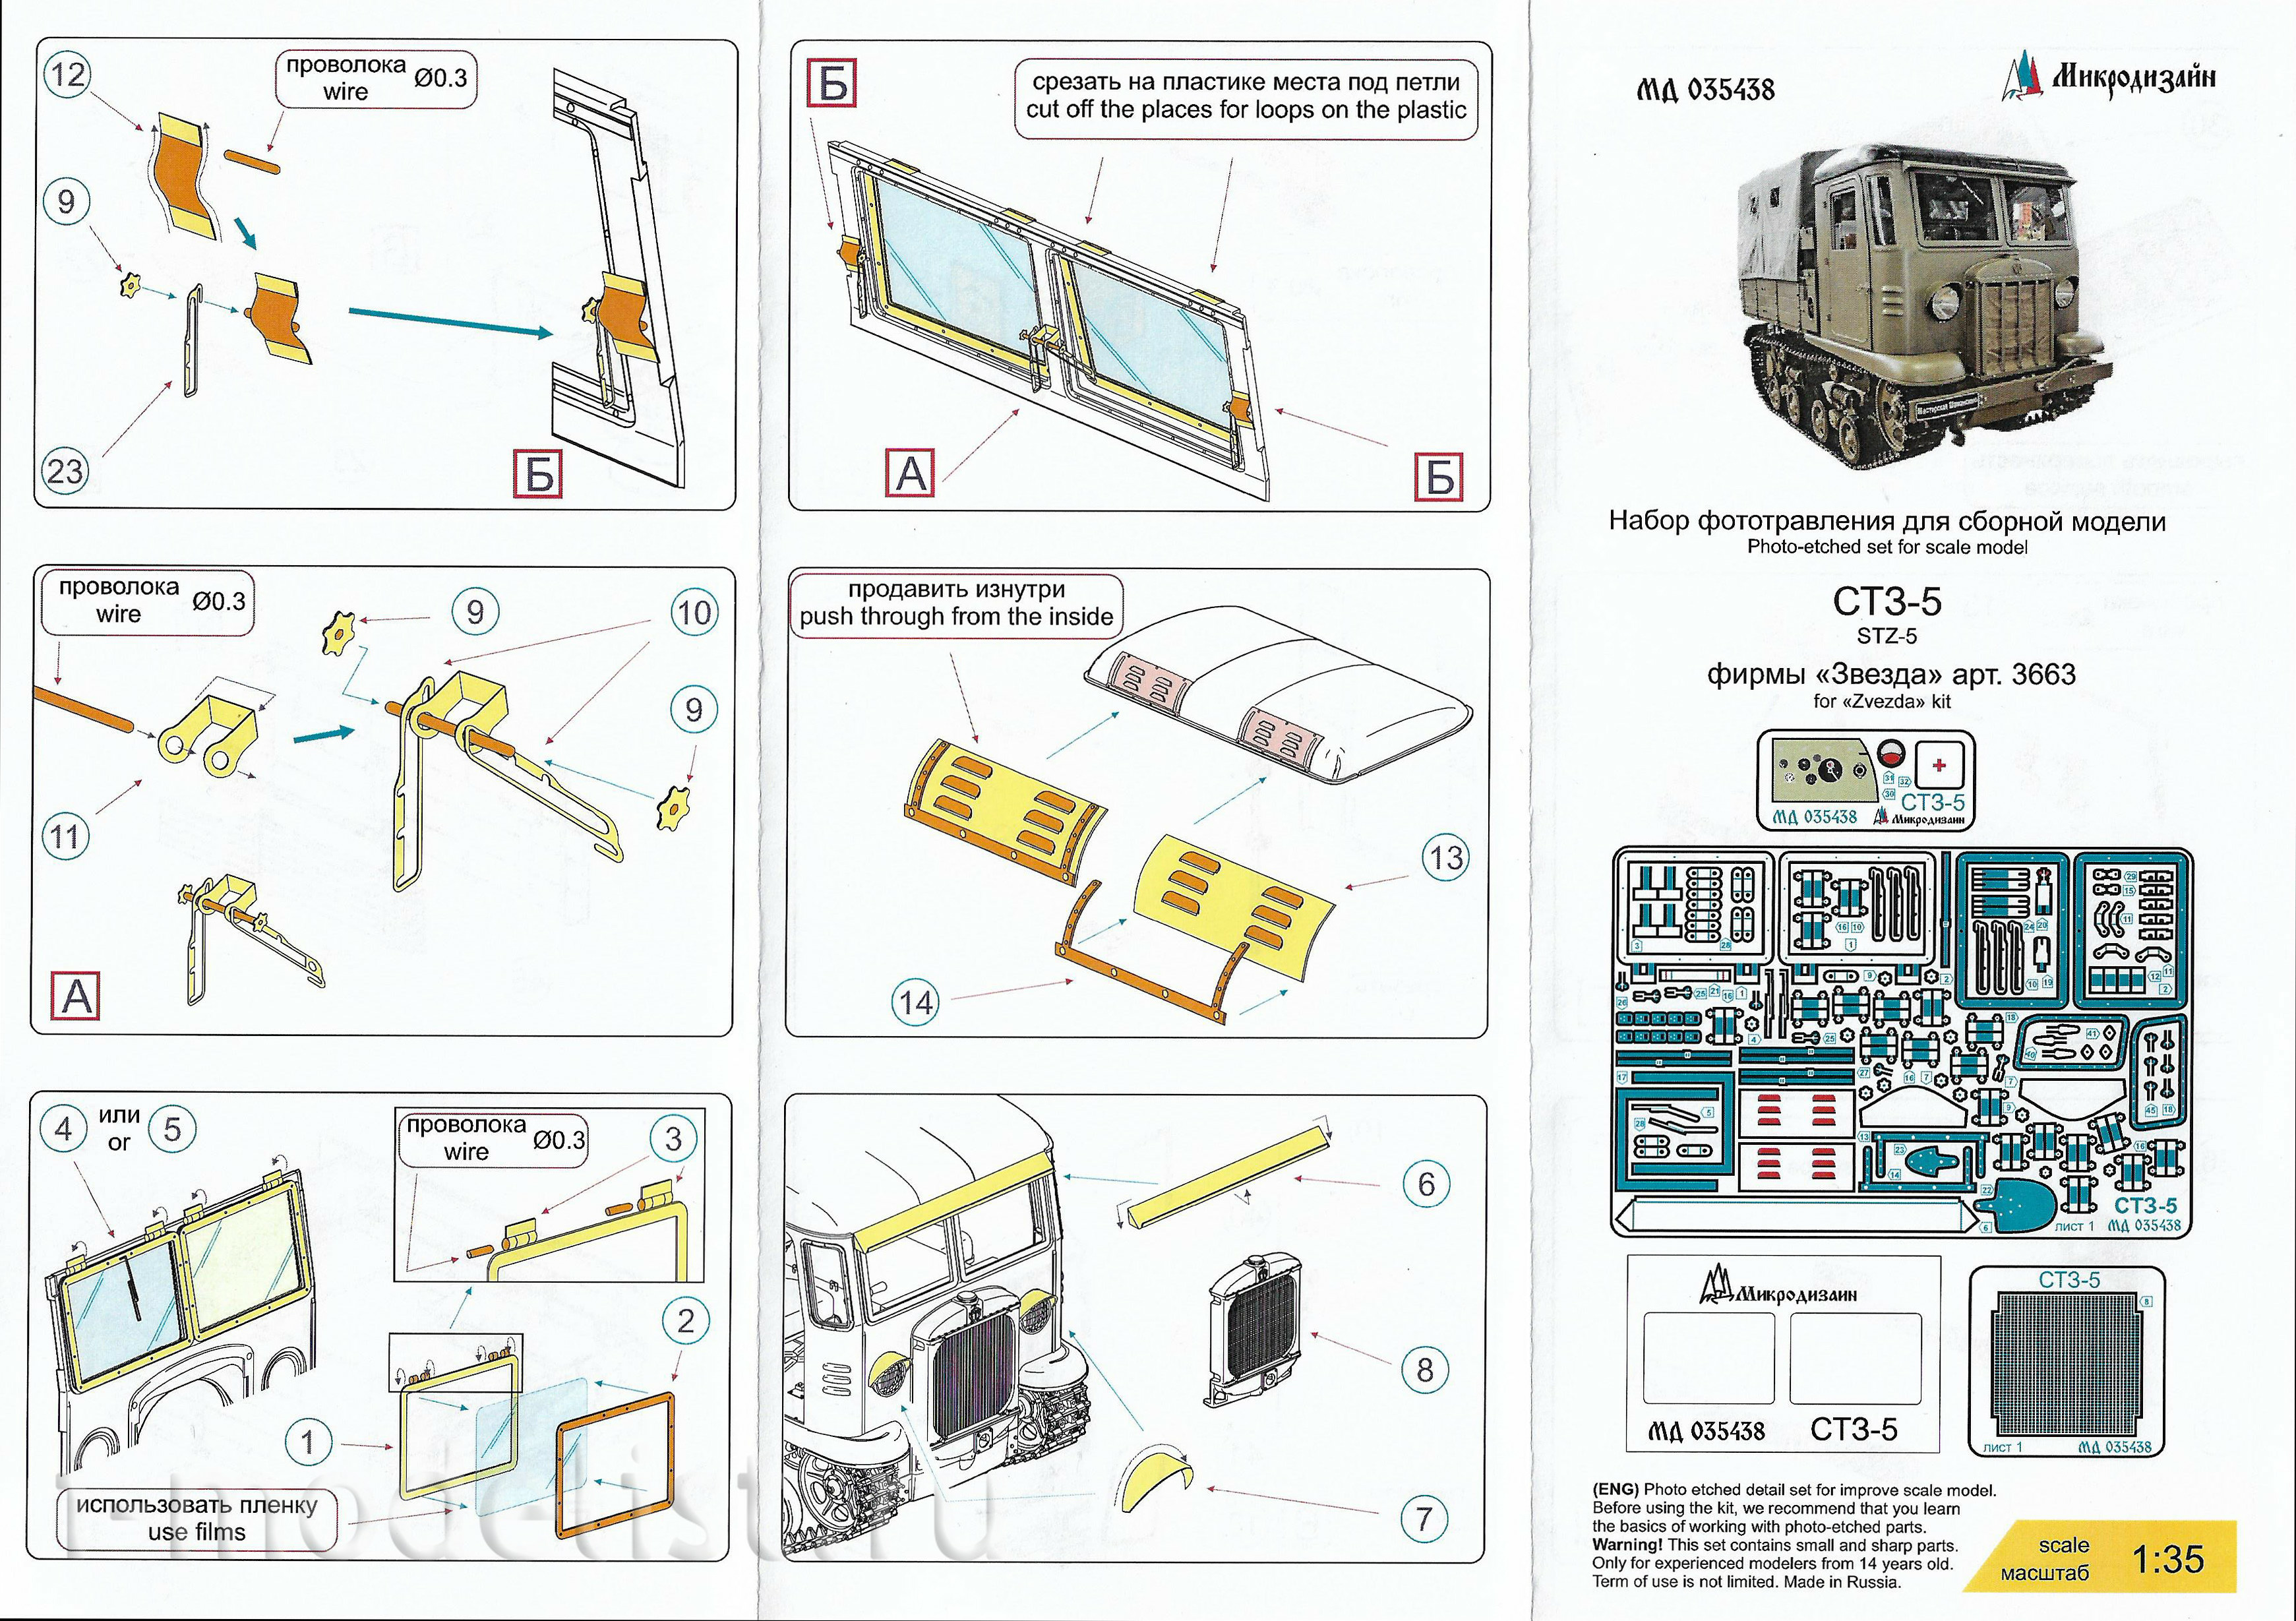 035438 Microdesign 1/35 Photo Etching Kit for STZ-5 (Zvezda)